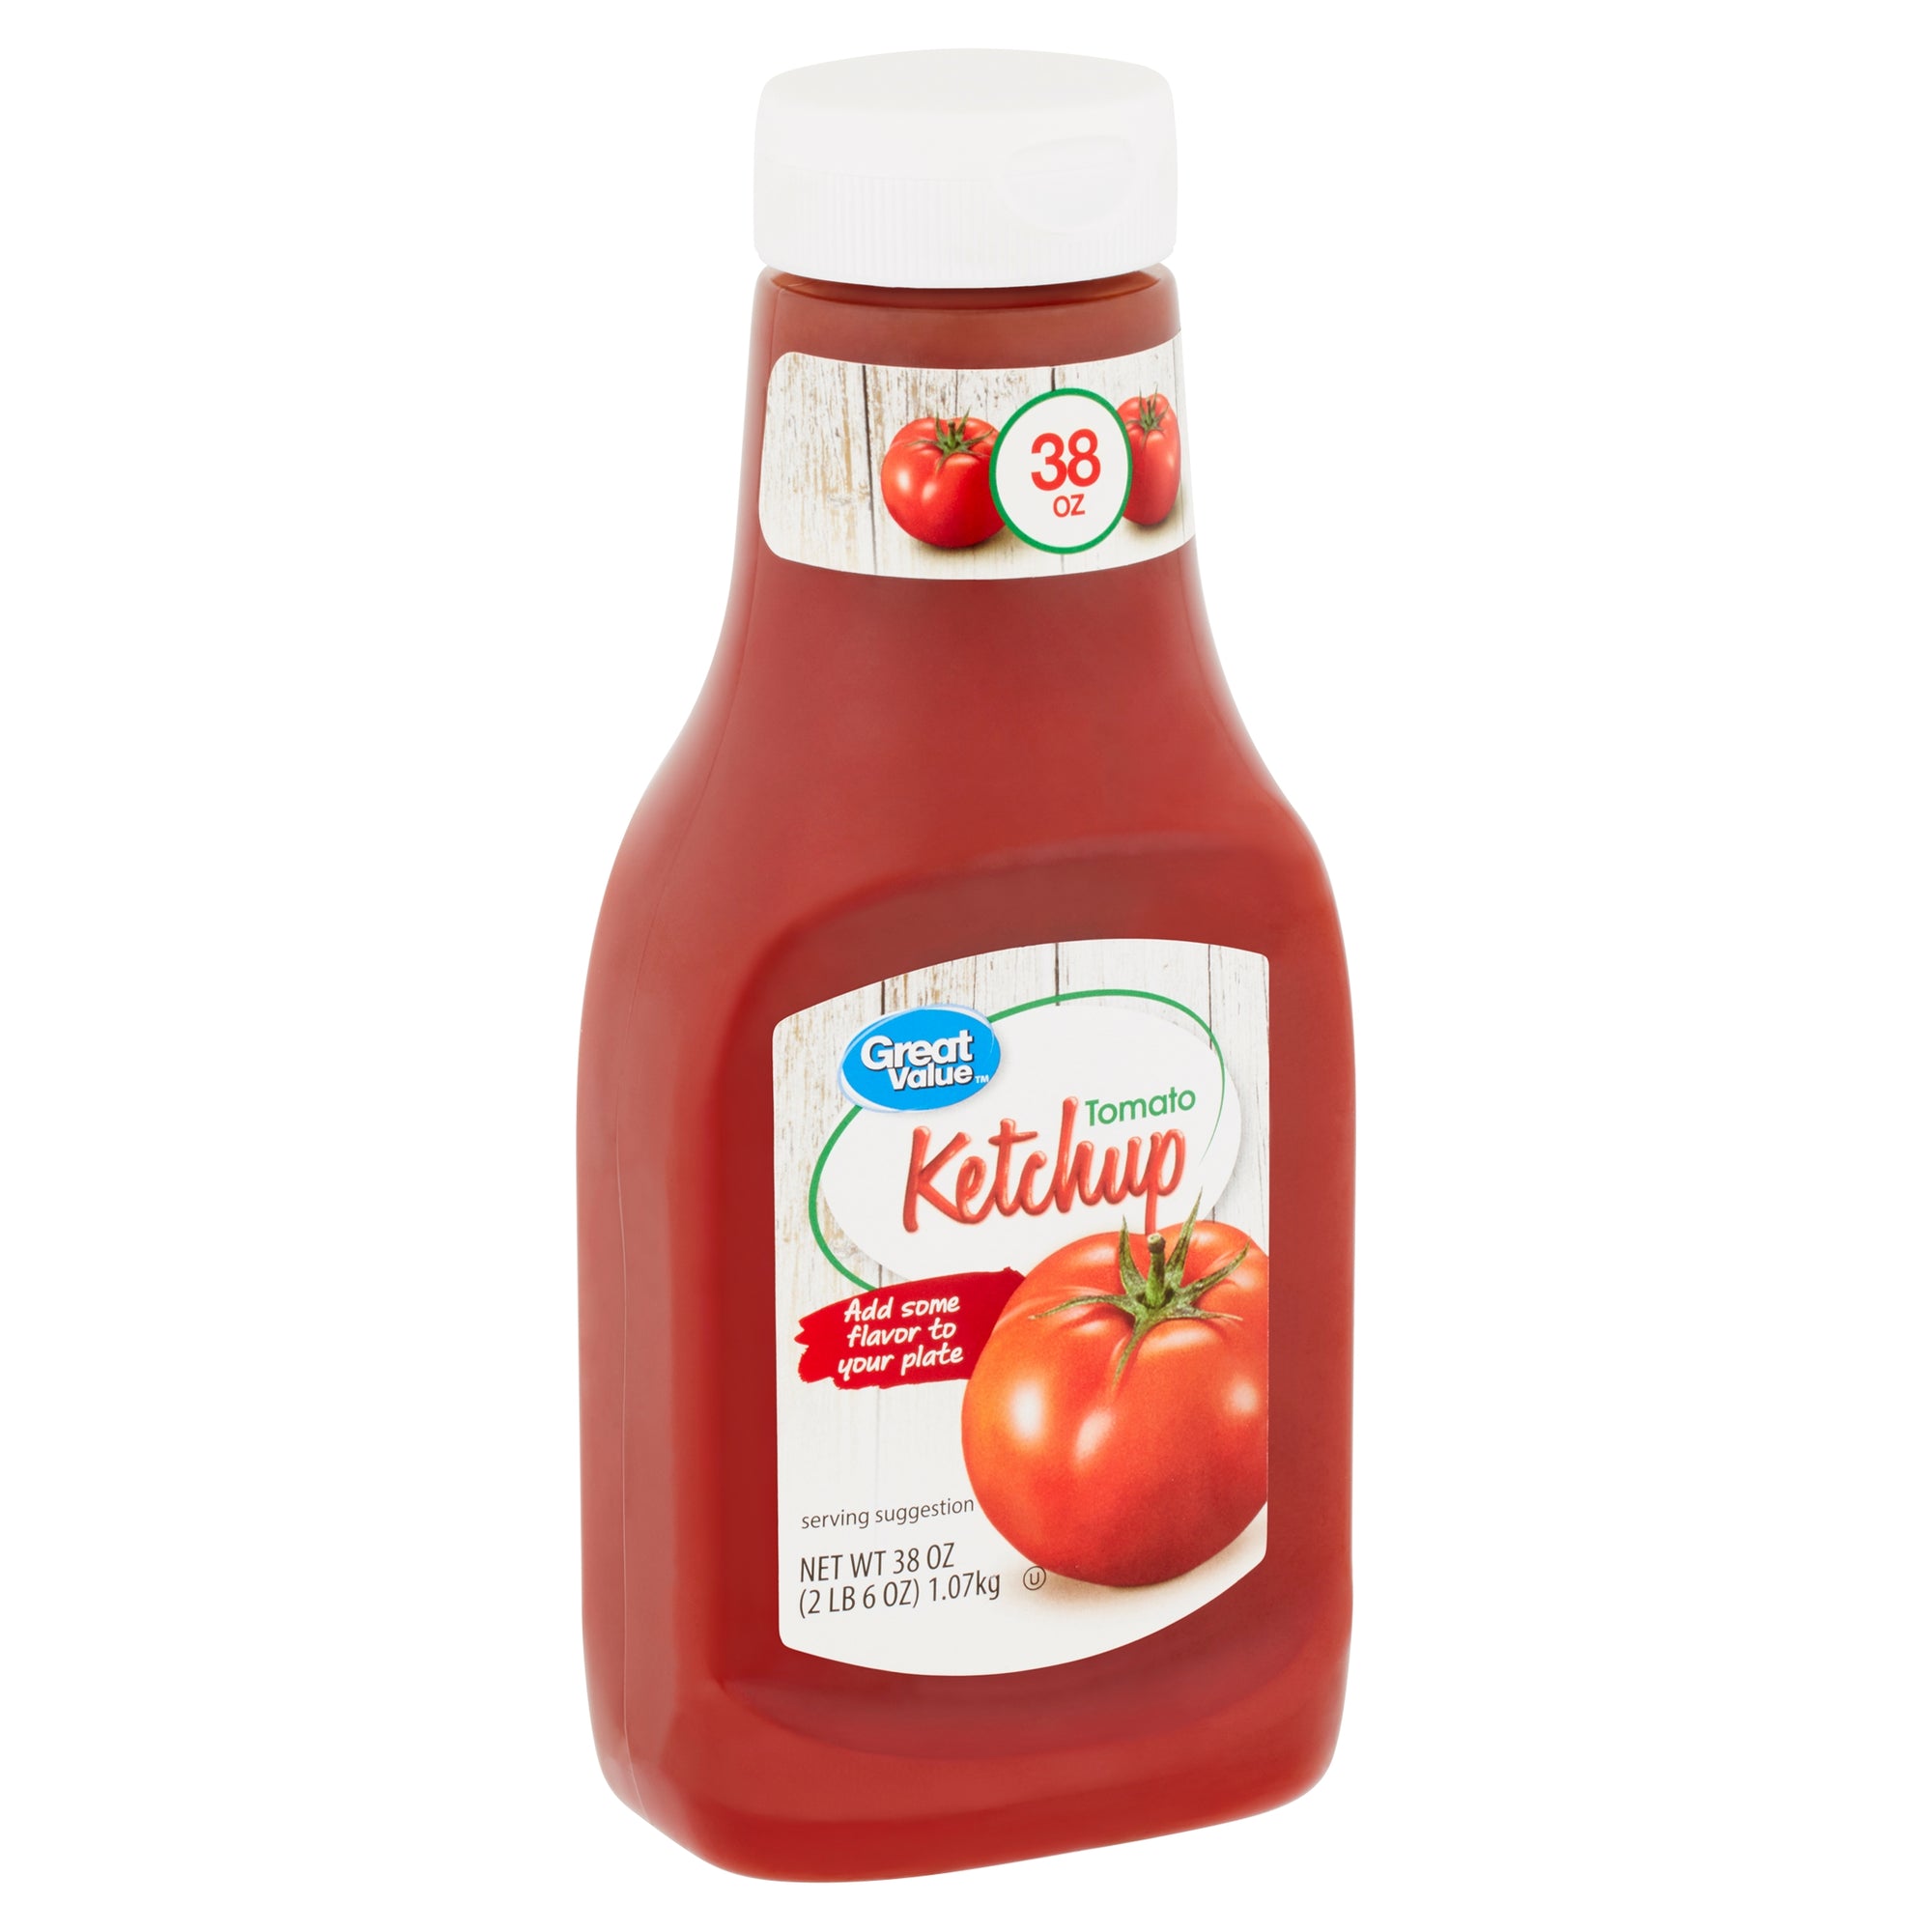 Great Value Tomato Ketchup 38oz